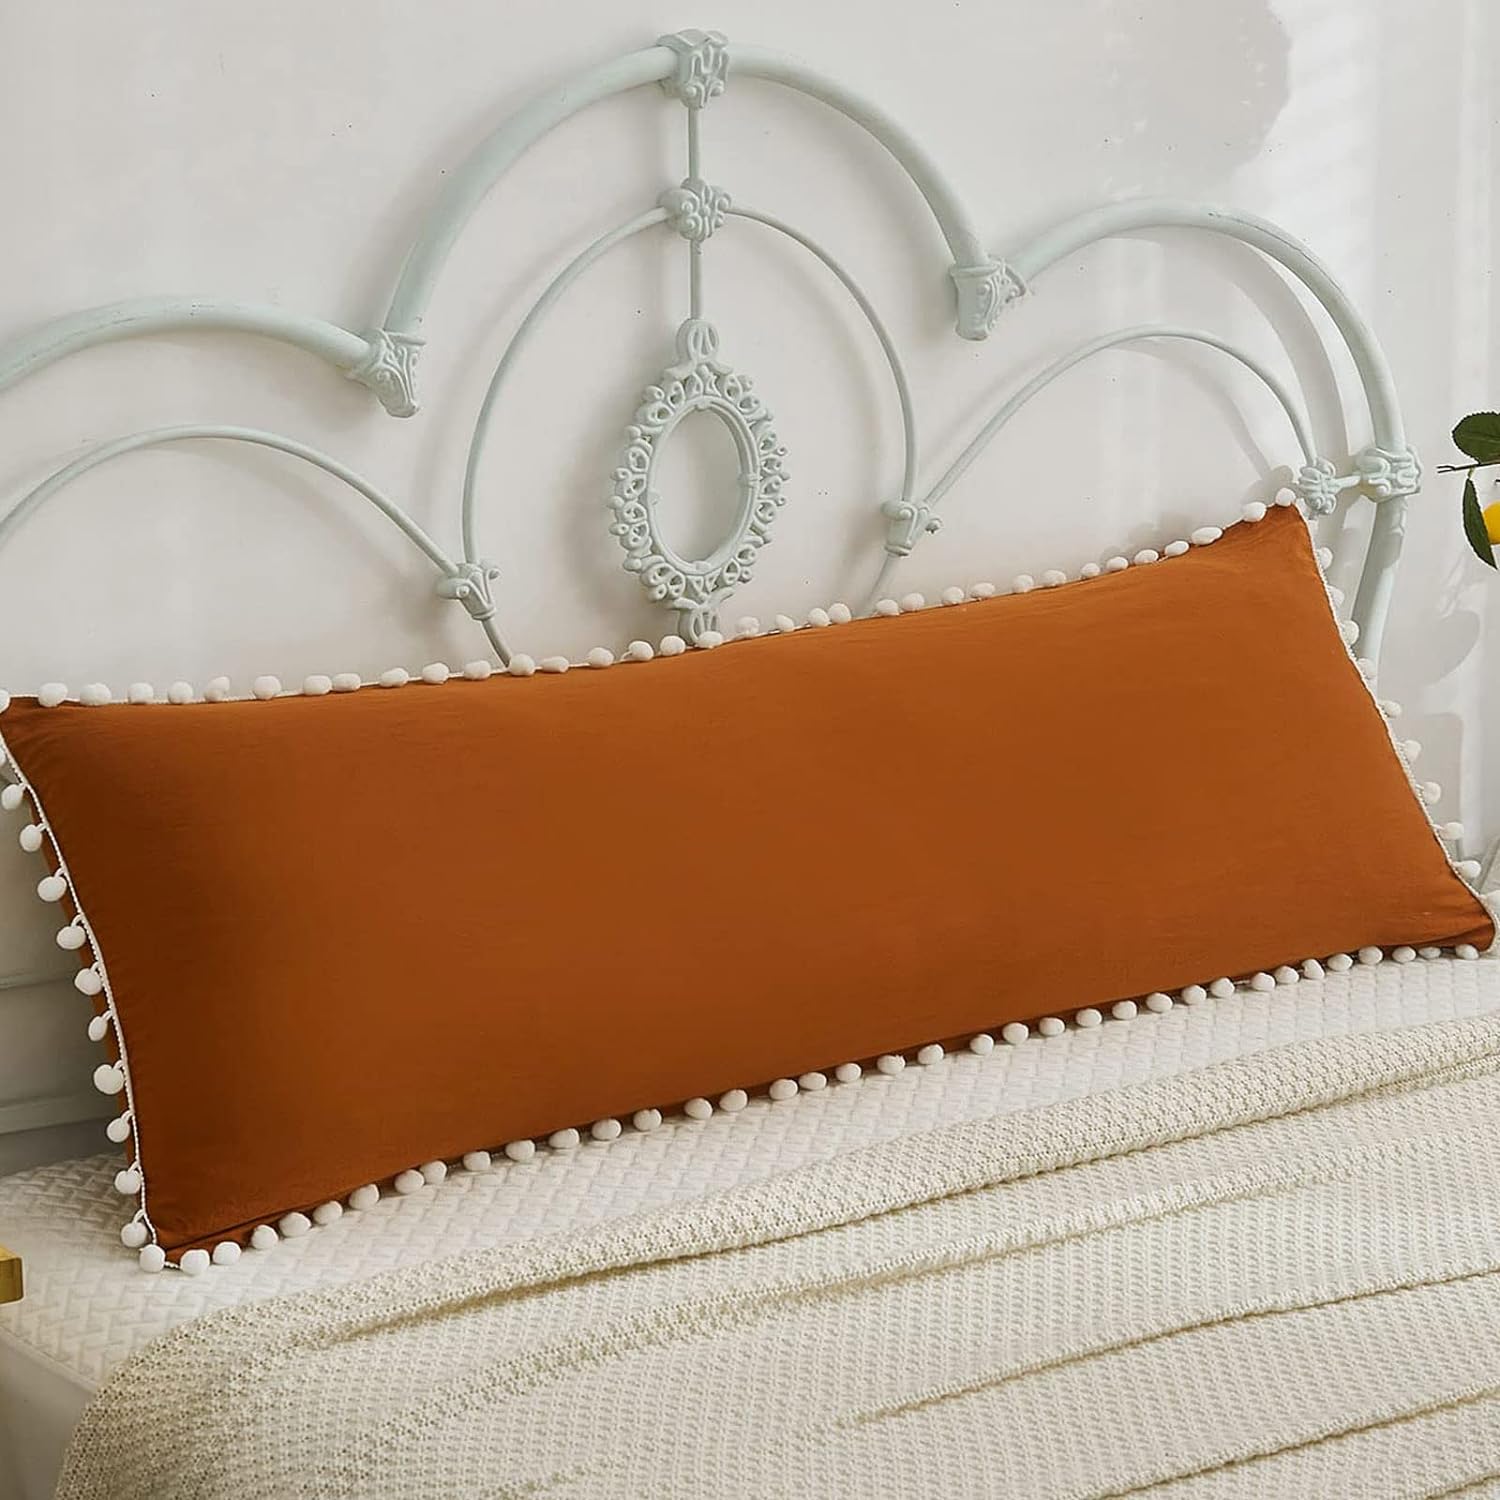 Bedbay Burnt Orange Body Pillow Cover,20x54 Long Pillowcase,Shabby Chic Pom Pom Fringe Decor,Body Cute Pillowcase,1 PC Home Decorative Body Pillow Cases(Burnt Orange,Body)